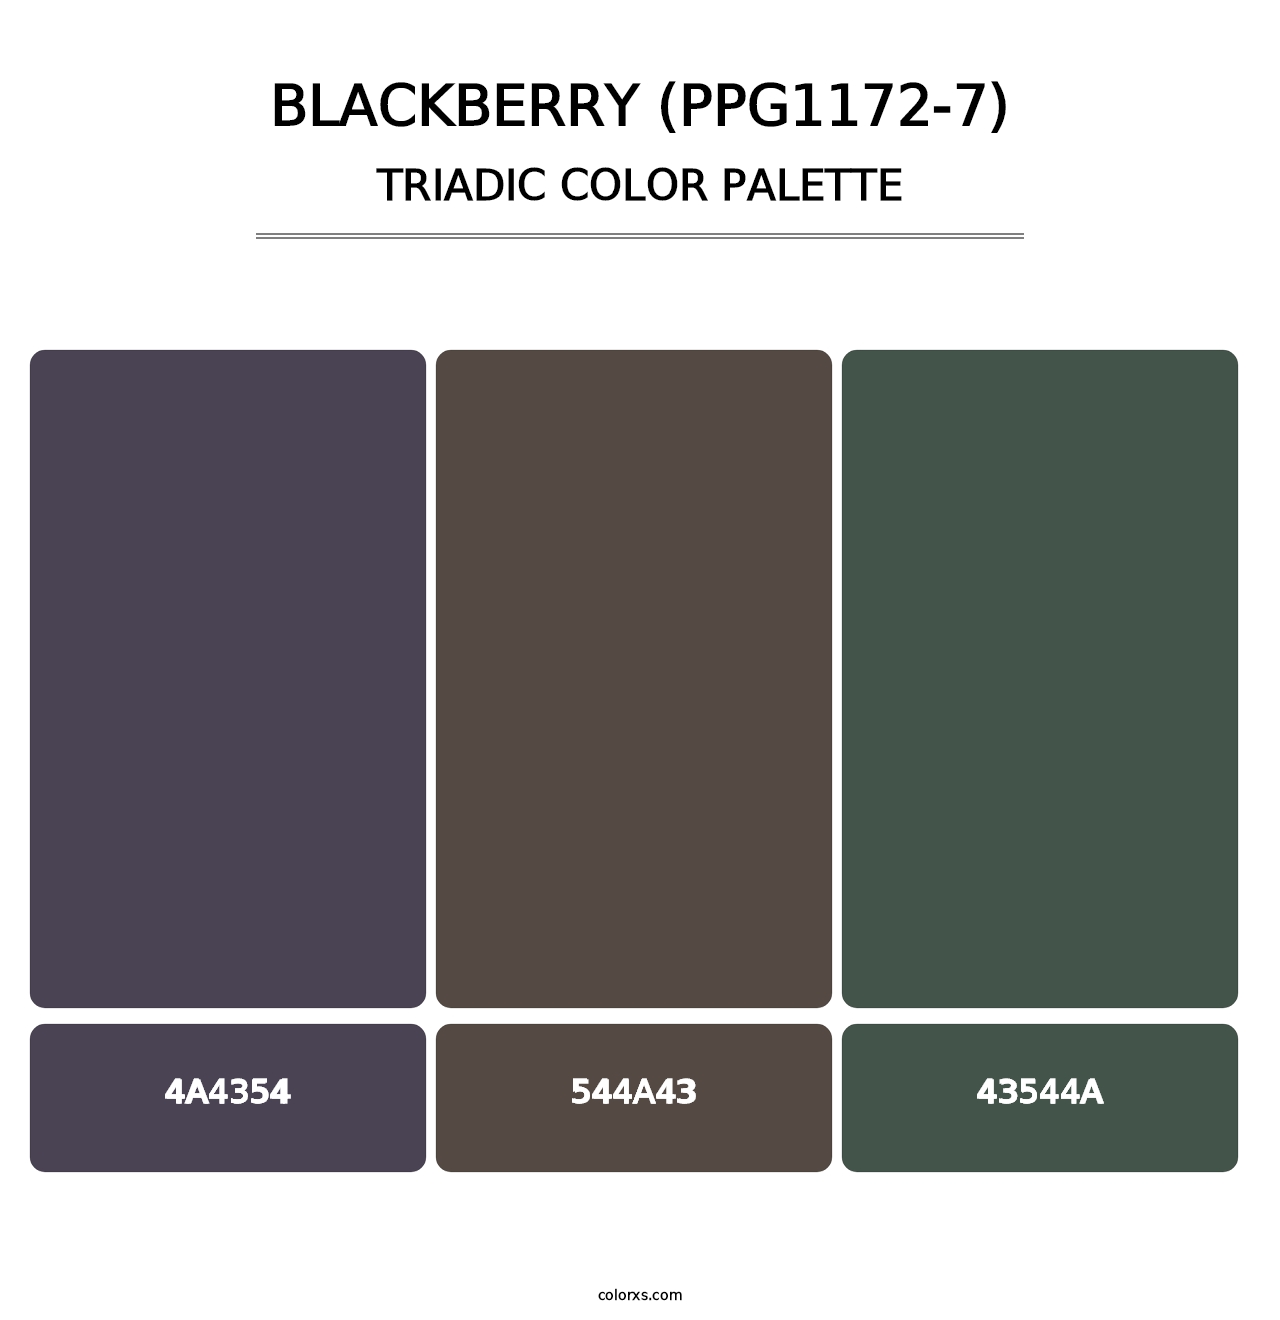 Blackberry (PPG1172-7) - Triadic Color Palette